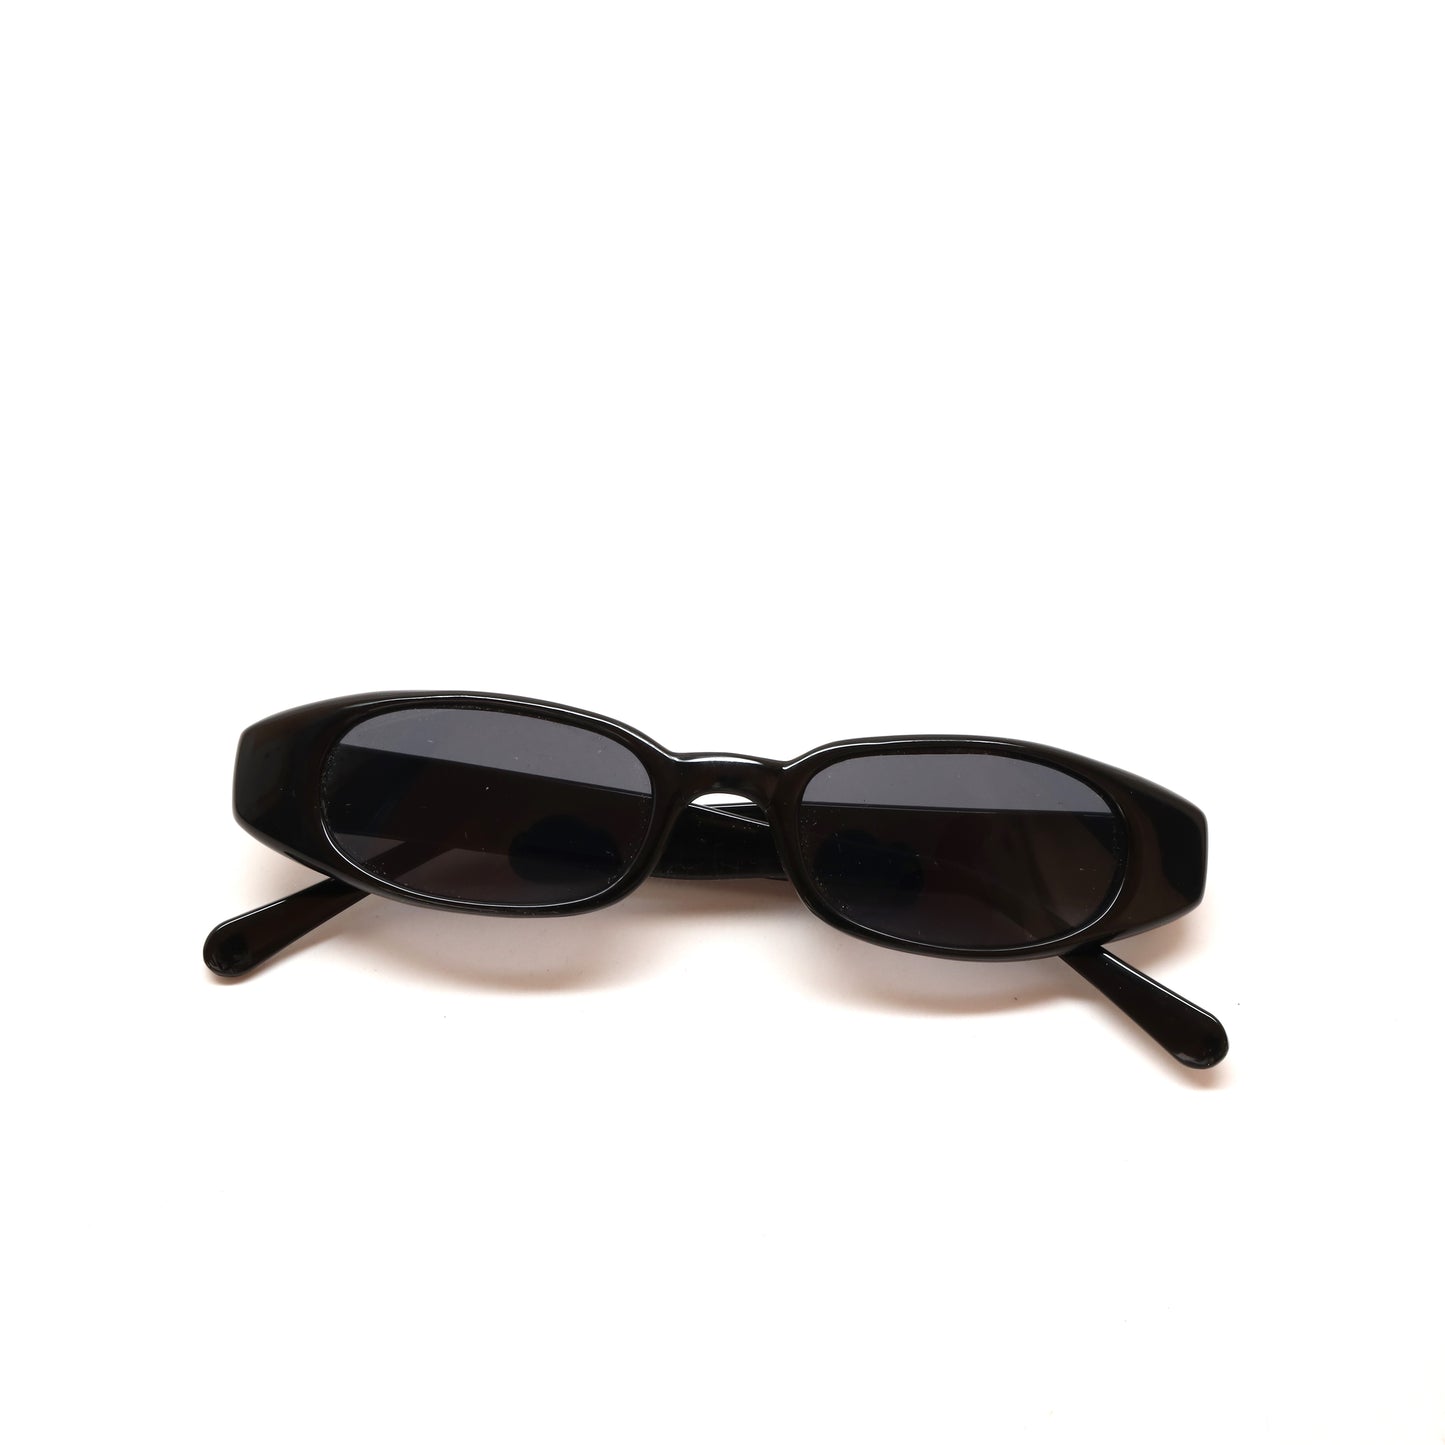 Vintage 90s New Old Stock Slim Narrow Frame Sunglasses - Black